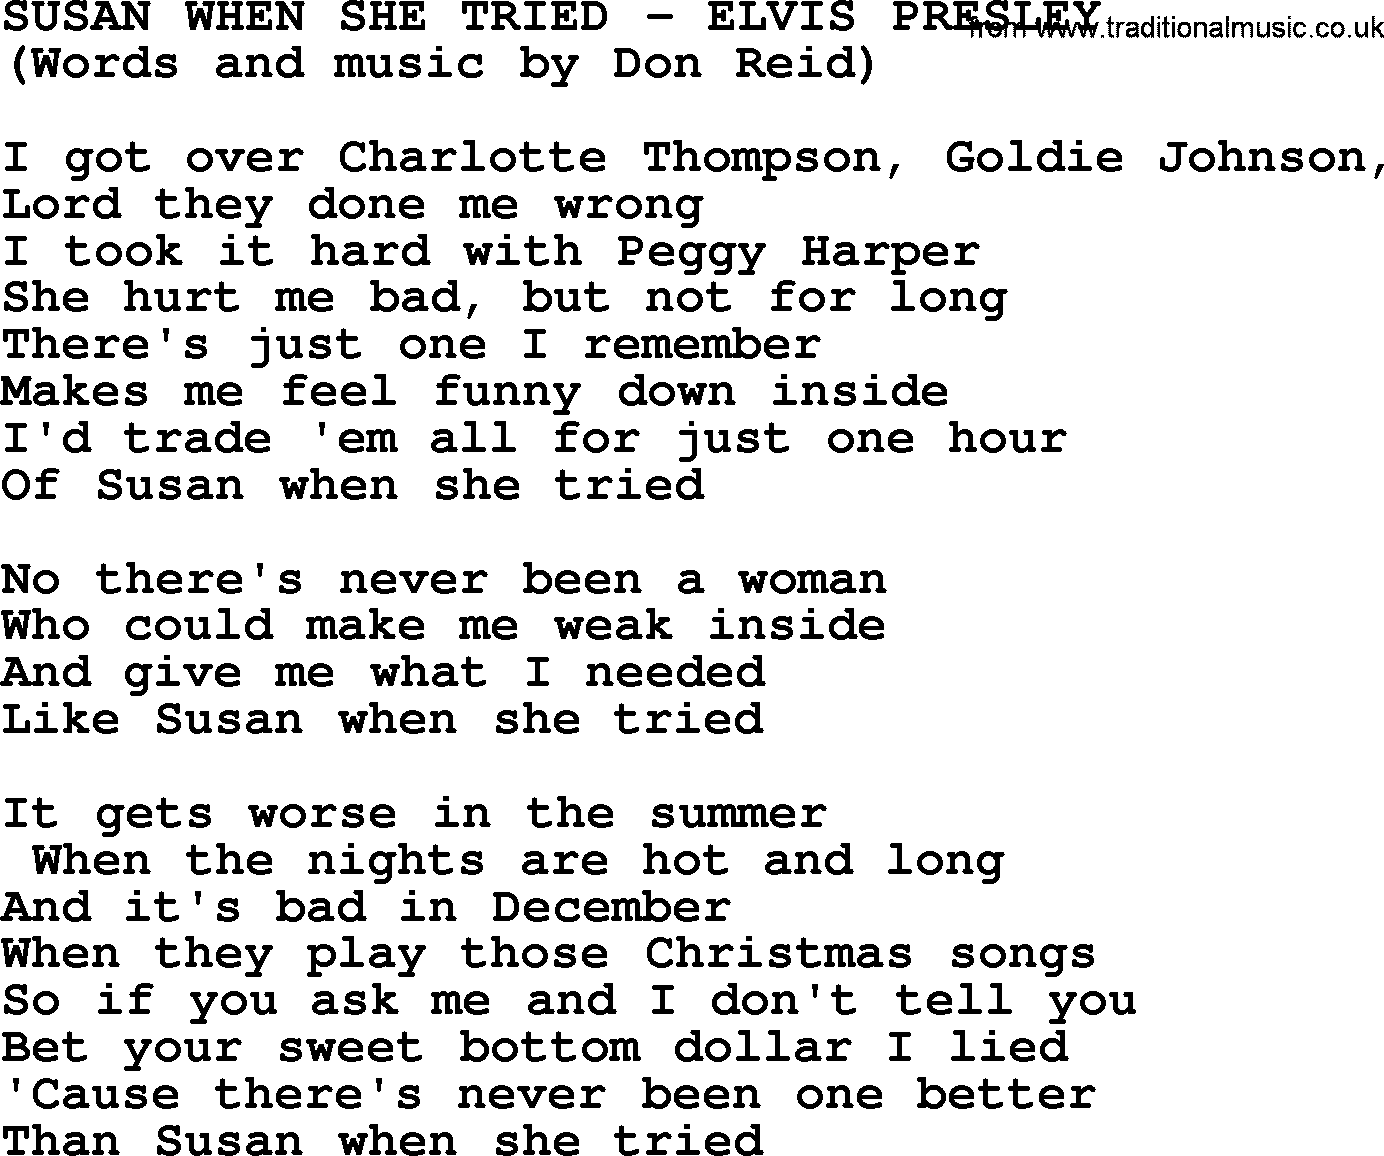 Elvis Presley song: Susan When She Tried lyrics